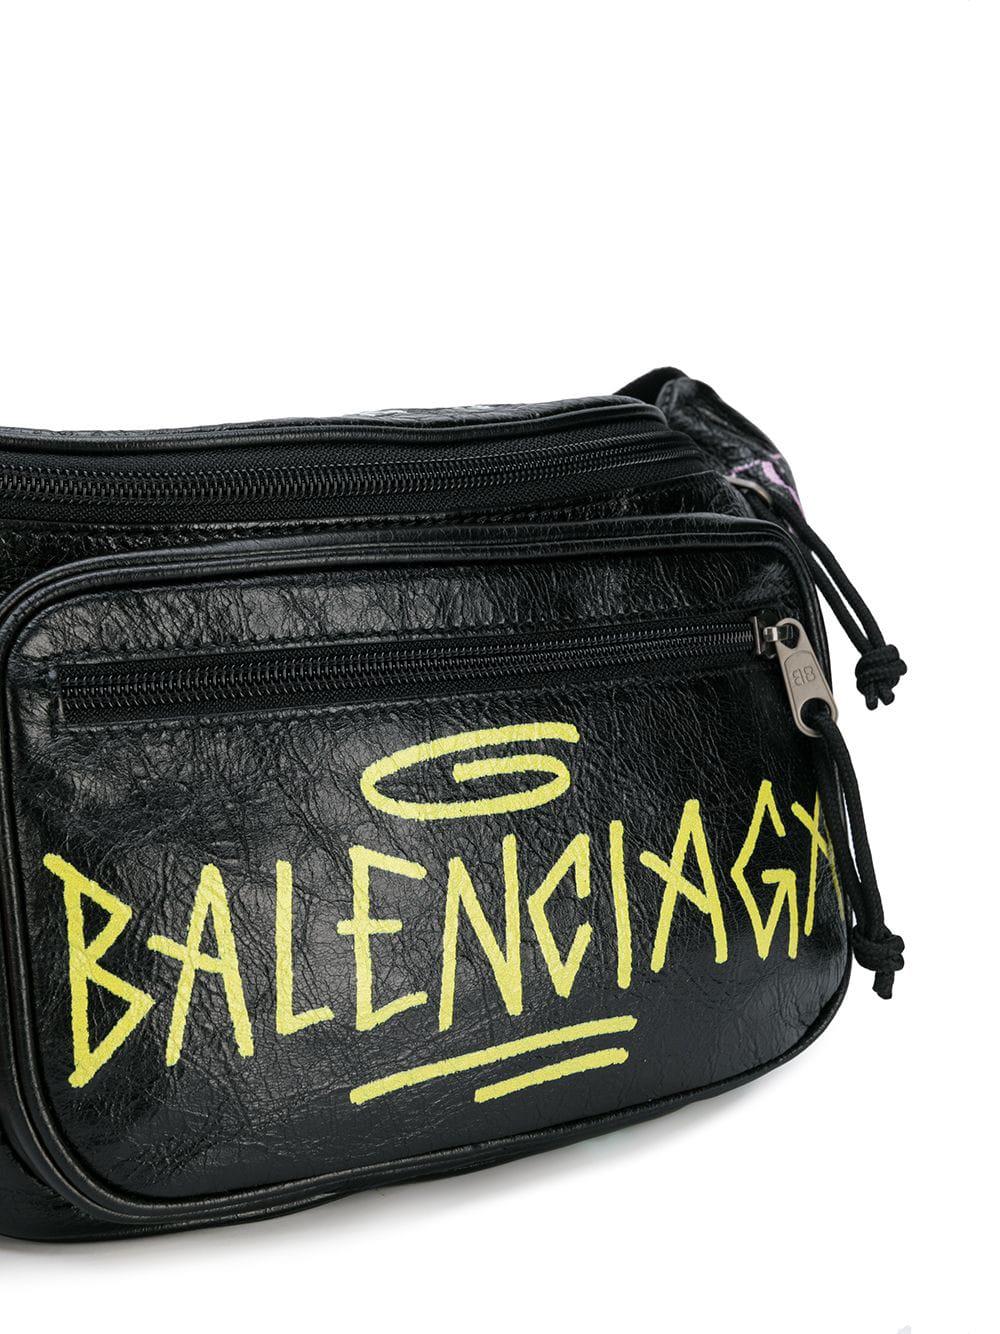 Balenciaga Explorer Belt Bag in Black for Men - Lyst